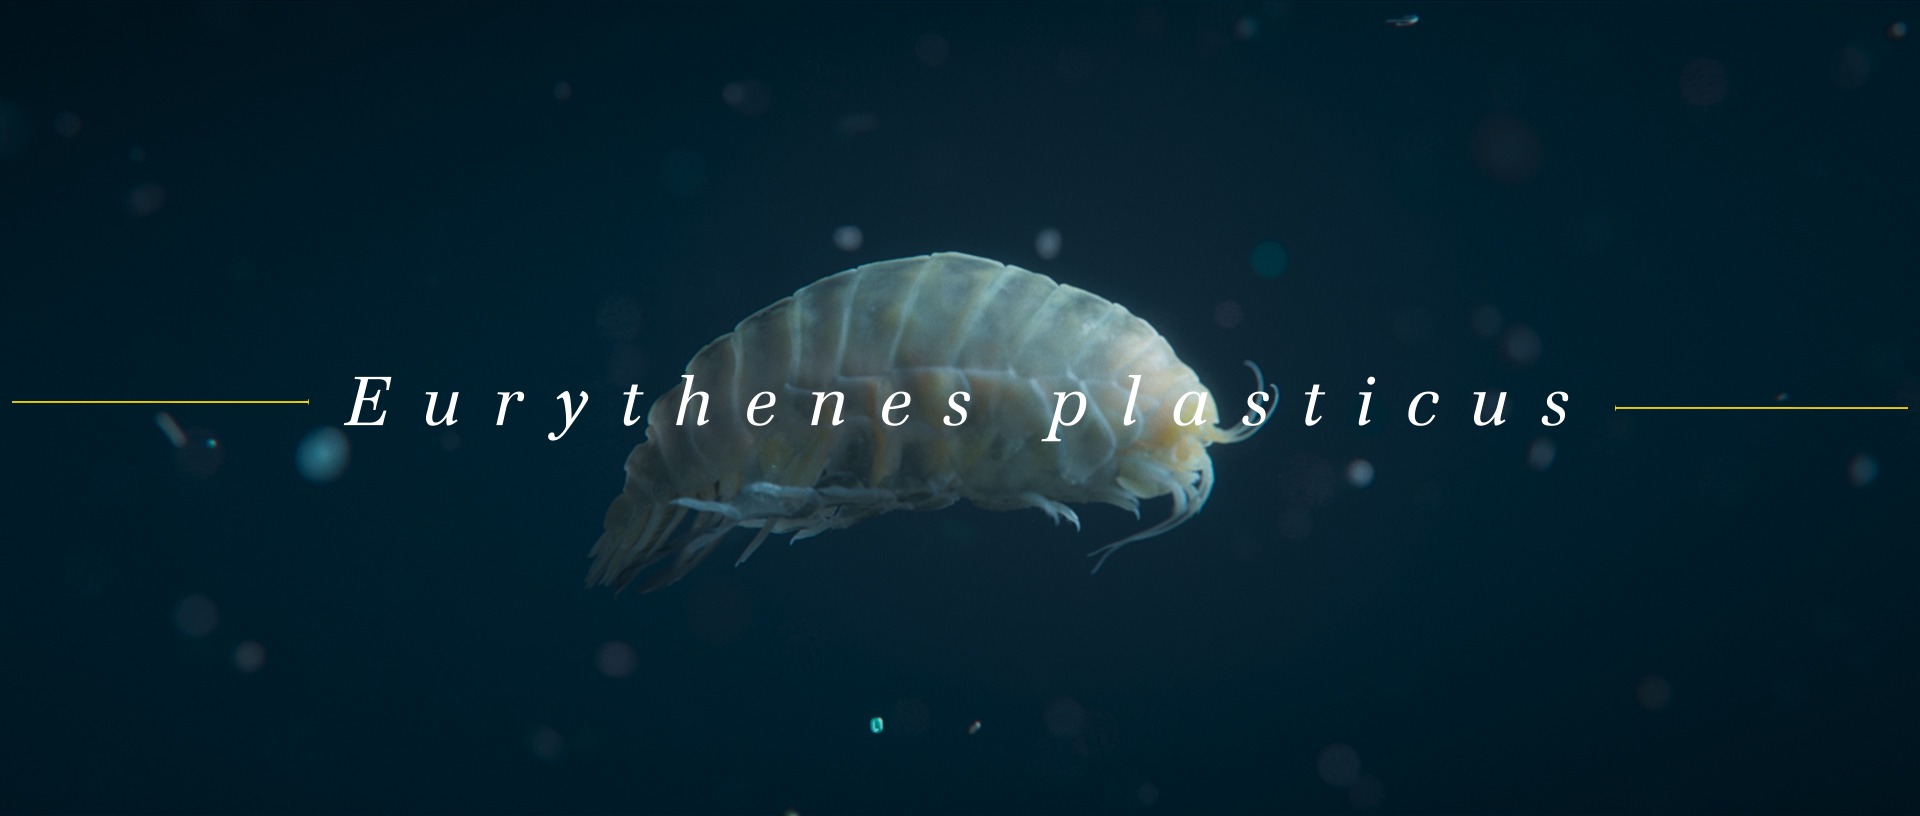 WWF Eurythenes Plasticus species